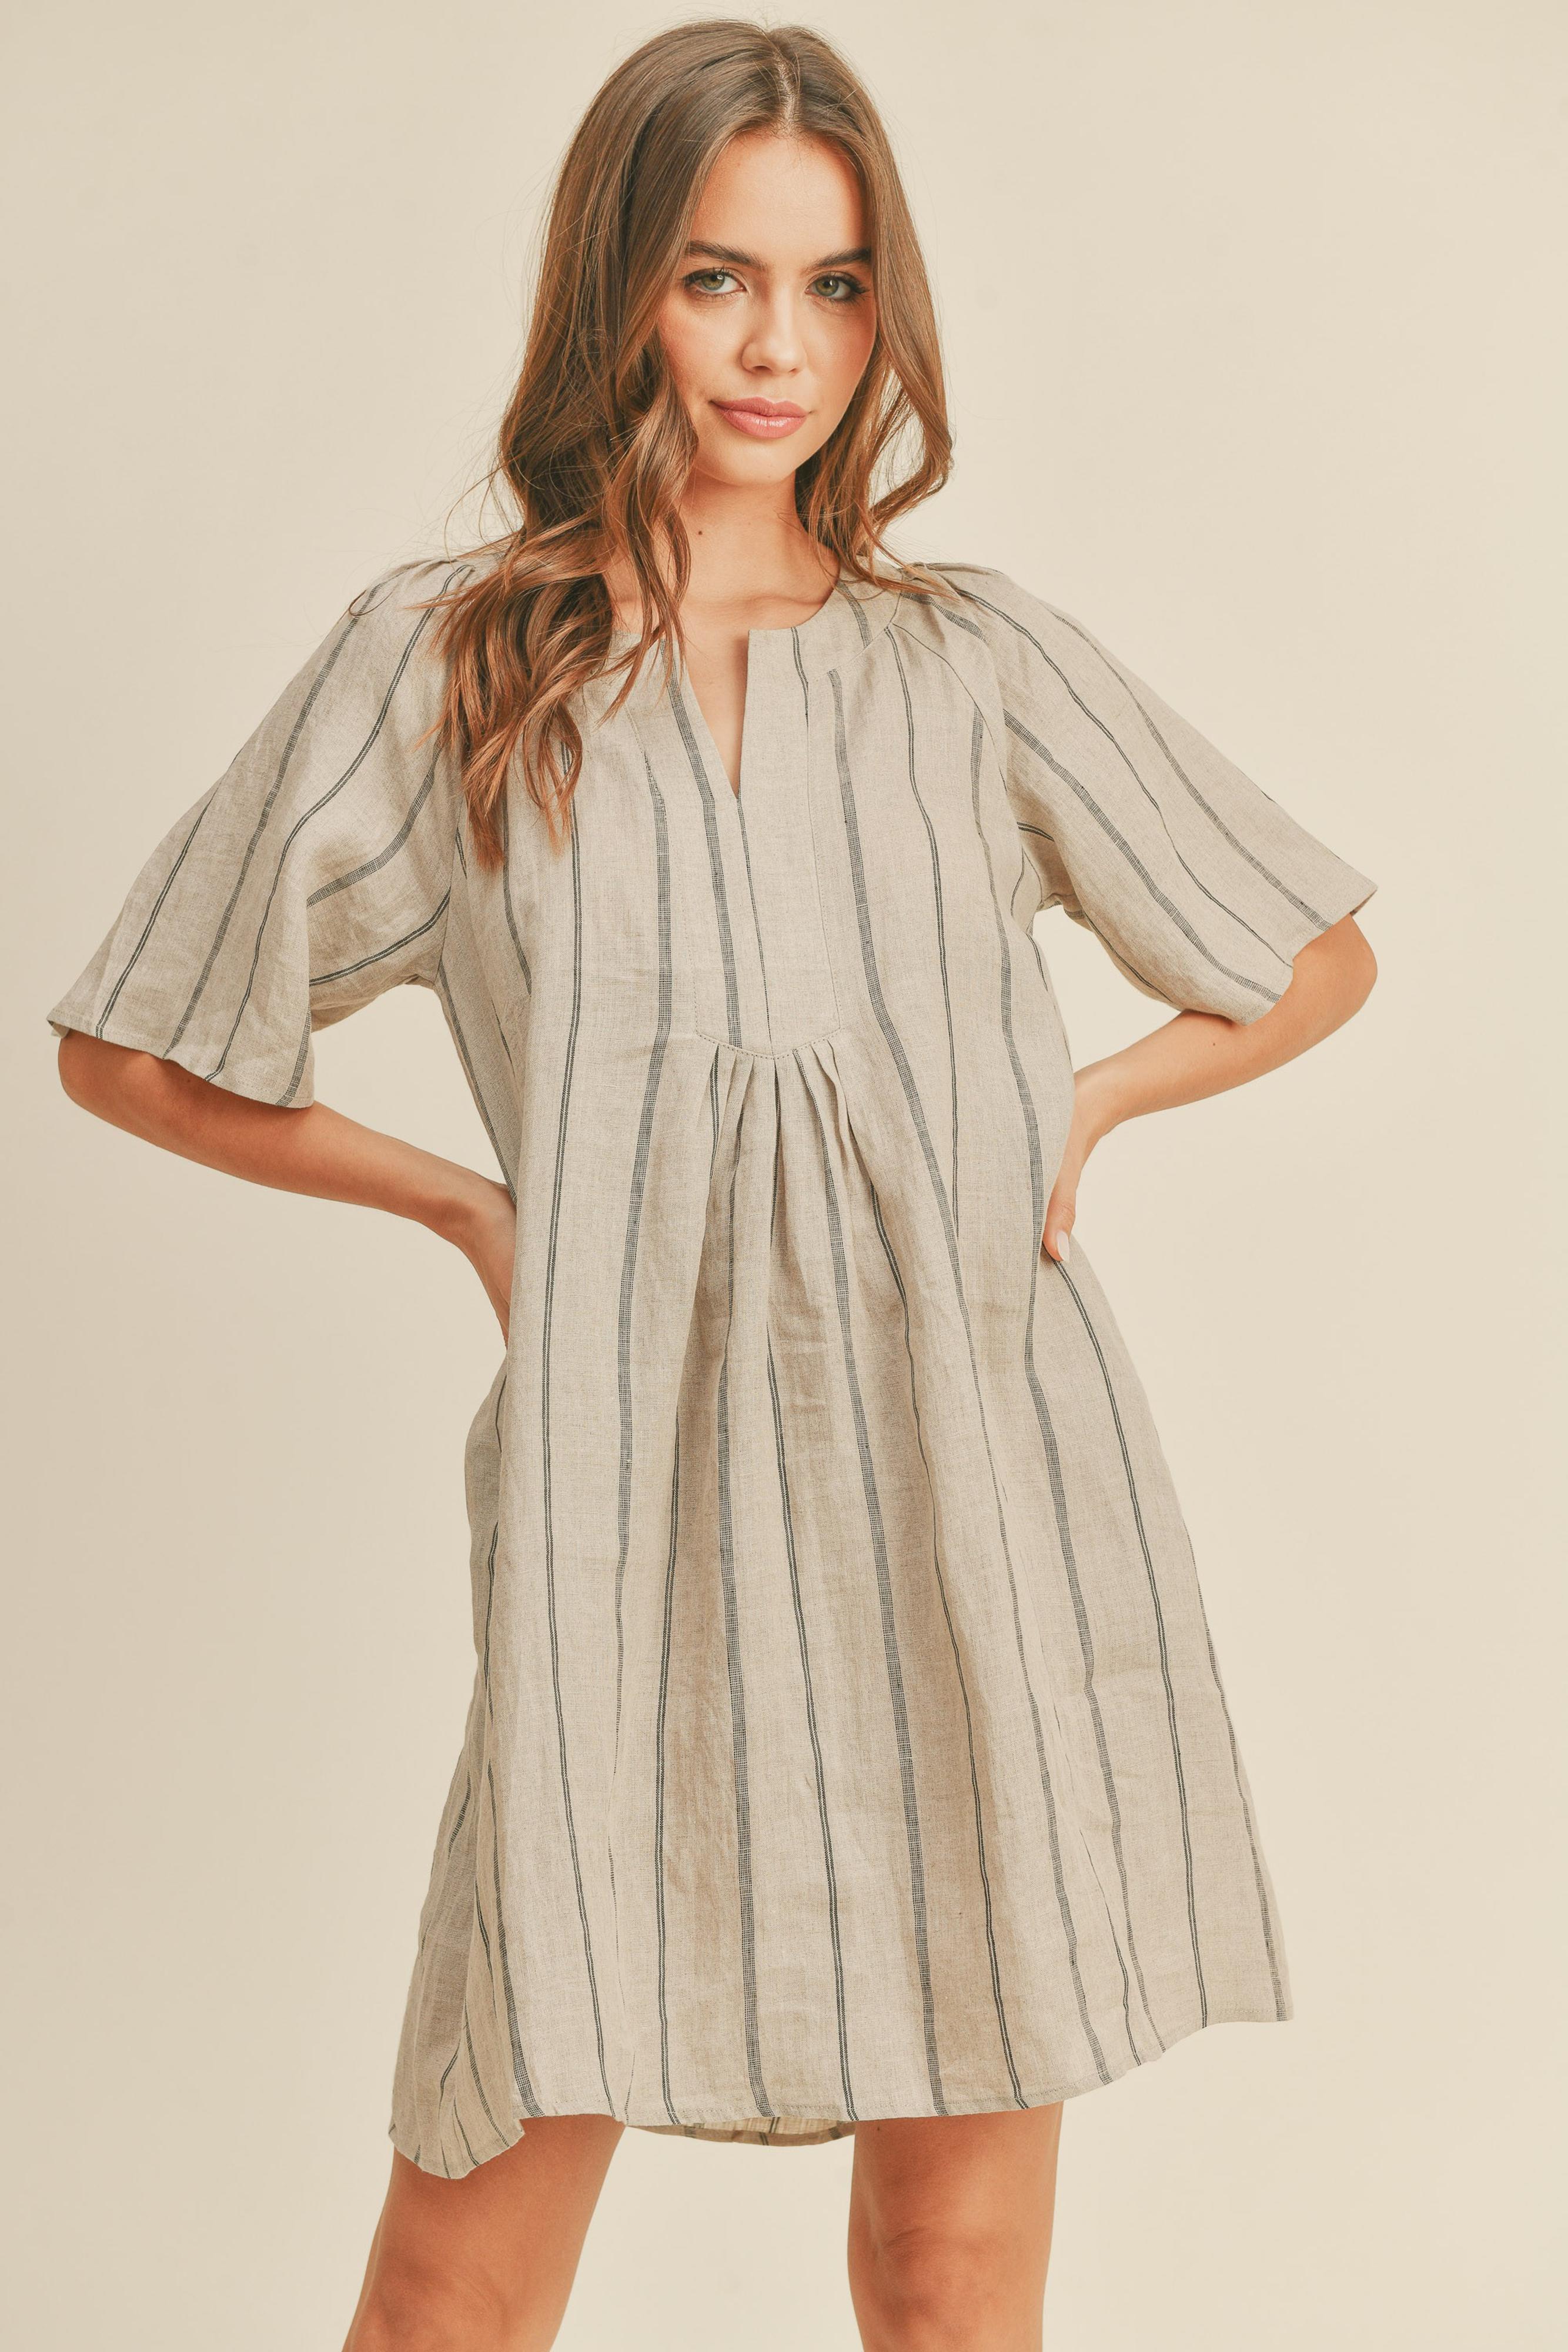  Lover Linen Striped Dress